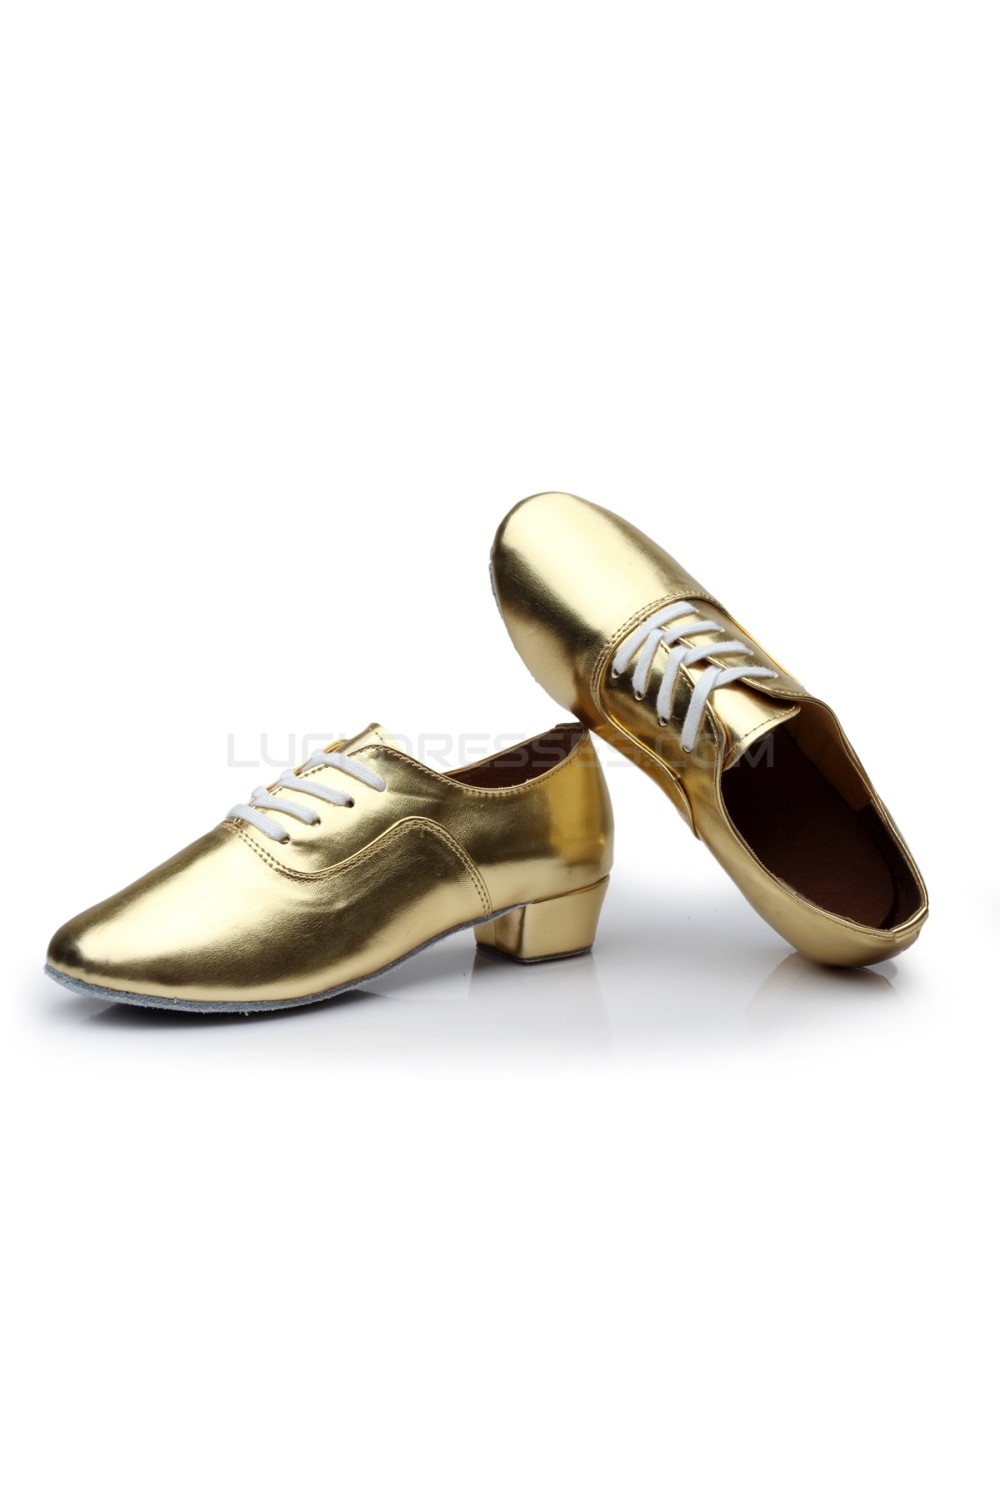 gold dance sneakers